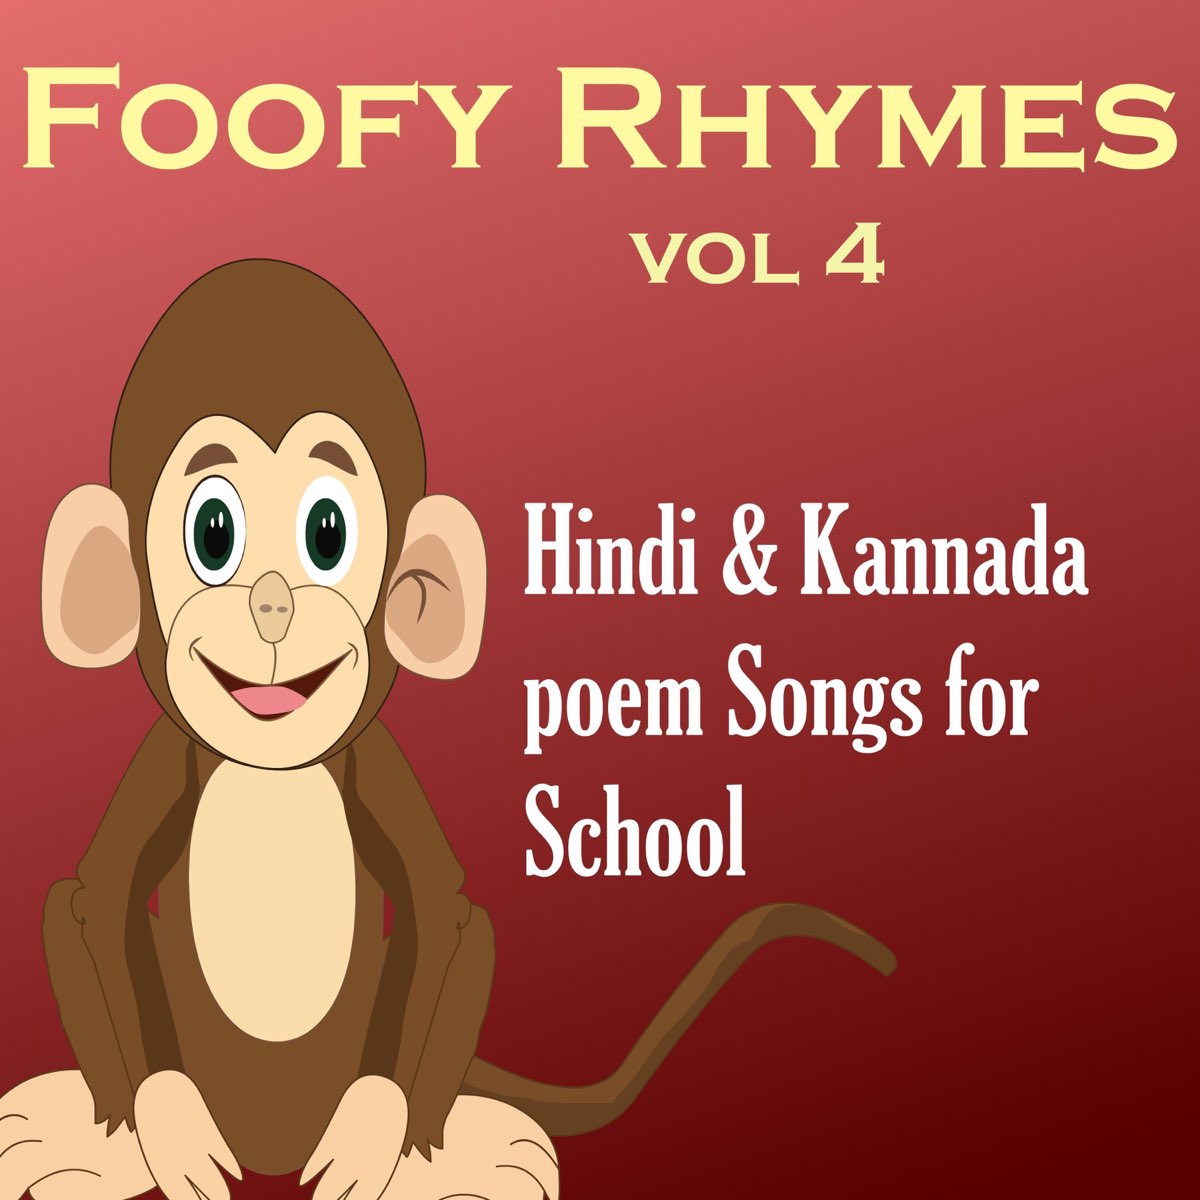 Foofy Rhymes, Vol. 4: Hindi & Kannada Poem Songs for School by Anila Chandy  on Apple Music